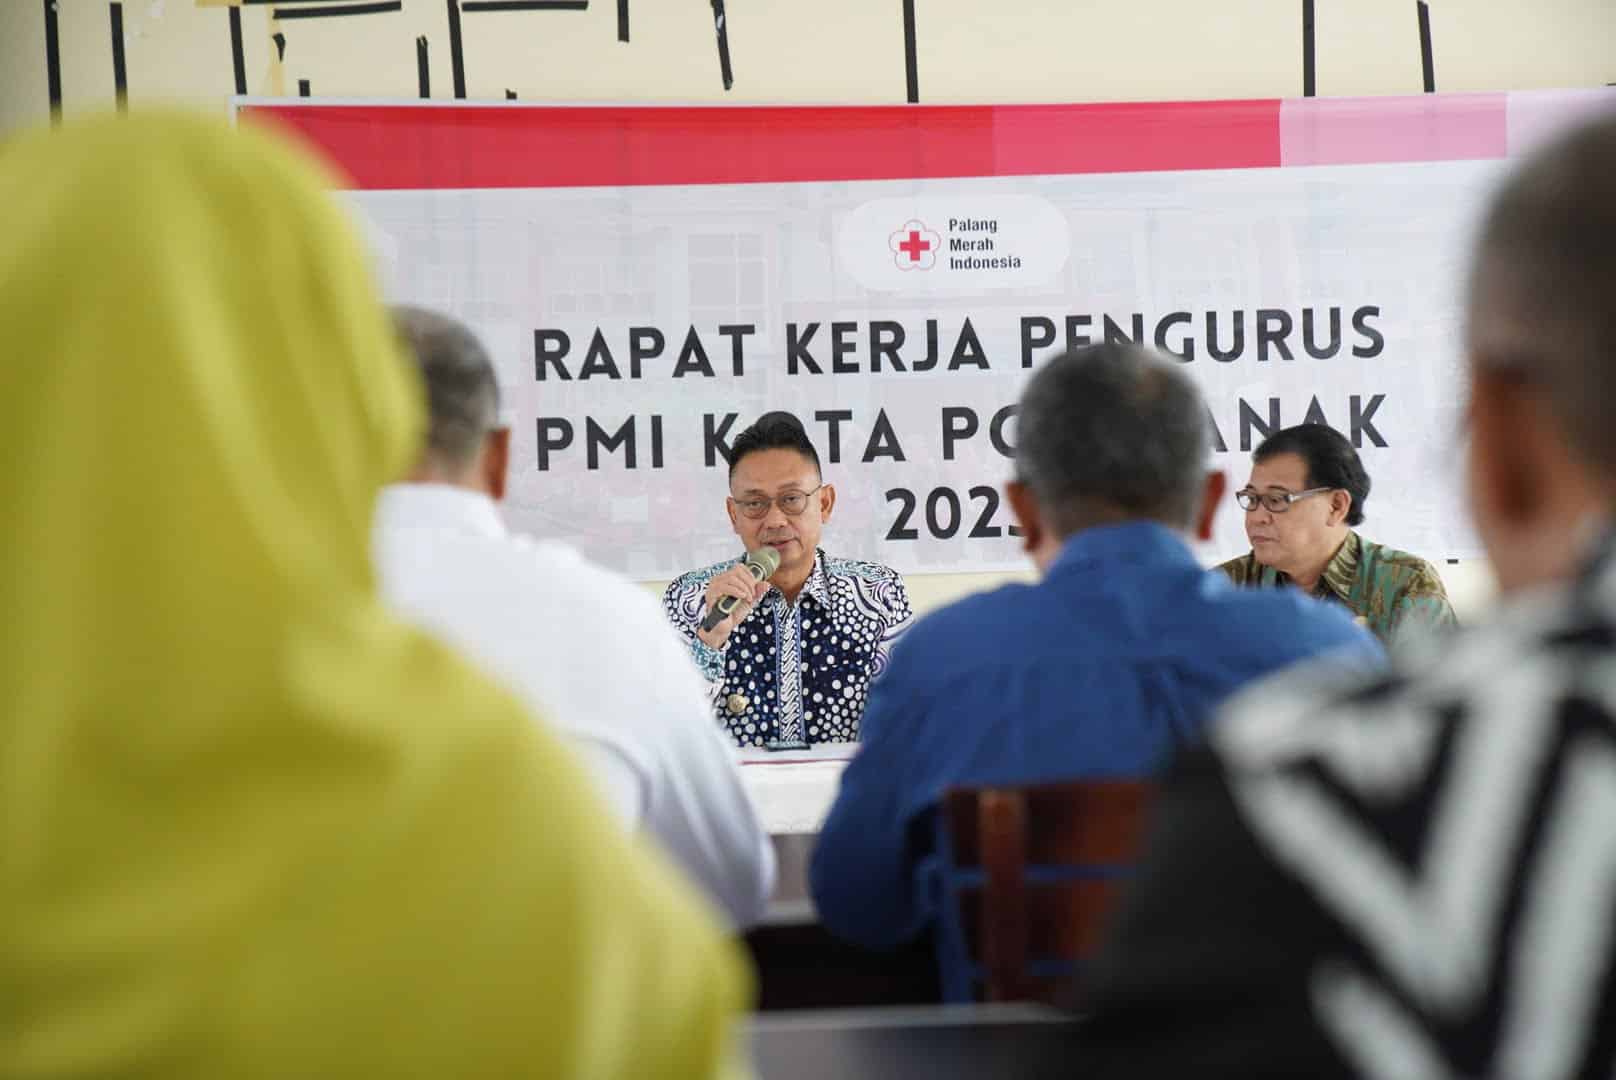 Ketua PMI Kota Pontianak, Edi Rusdi Kamtono memimpin rapat pengurus PMI Kota Pontianak masa bakti 2022 - 2027. (Foto: Prokopim For KalbarOnline.com)